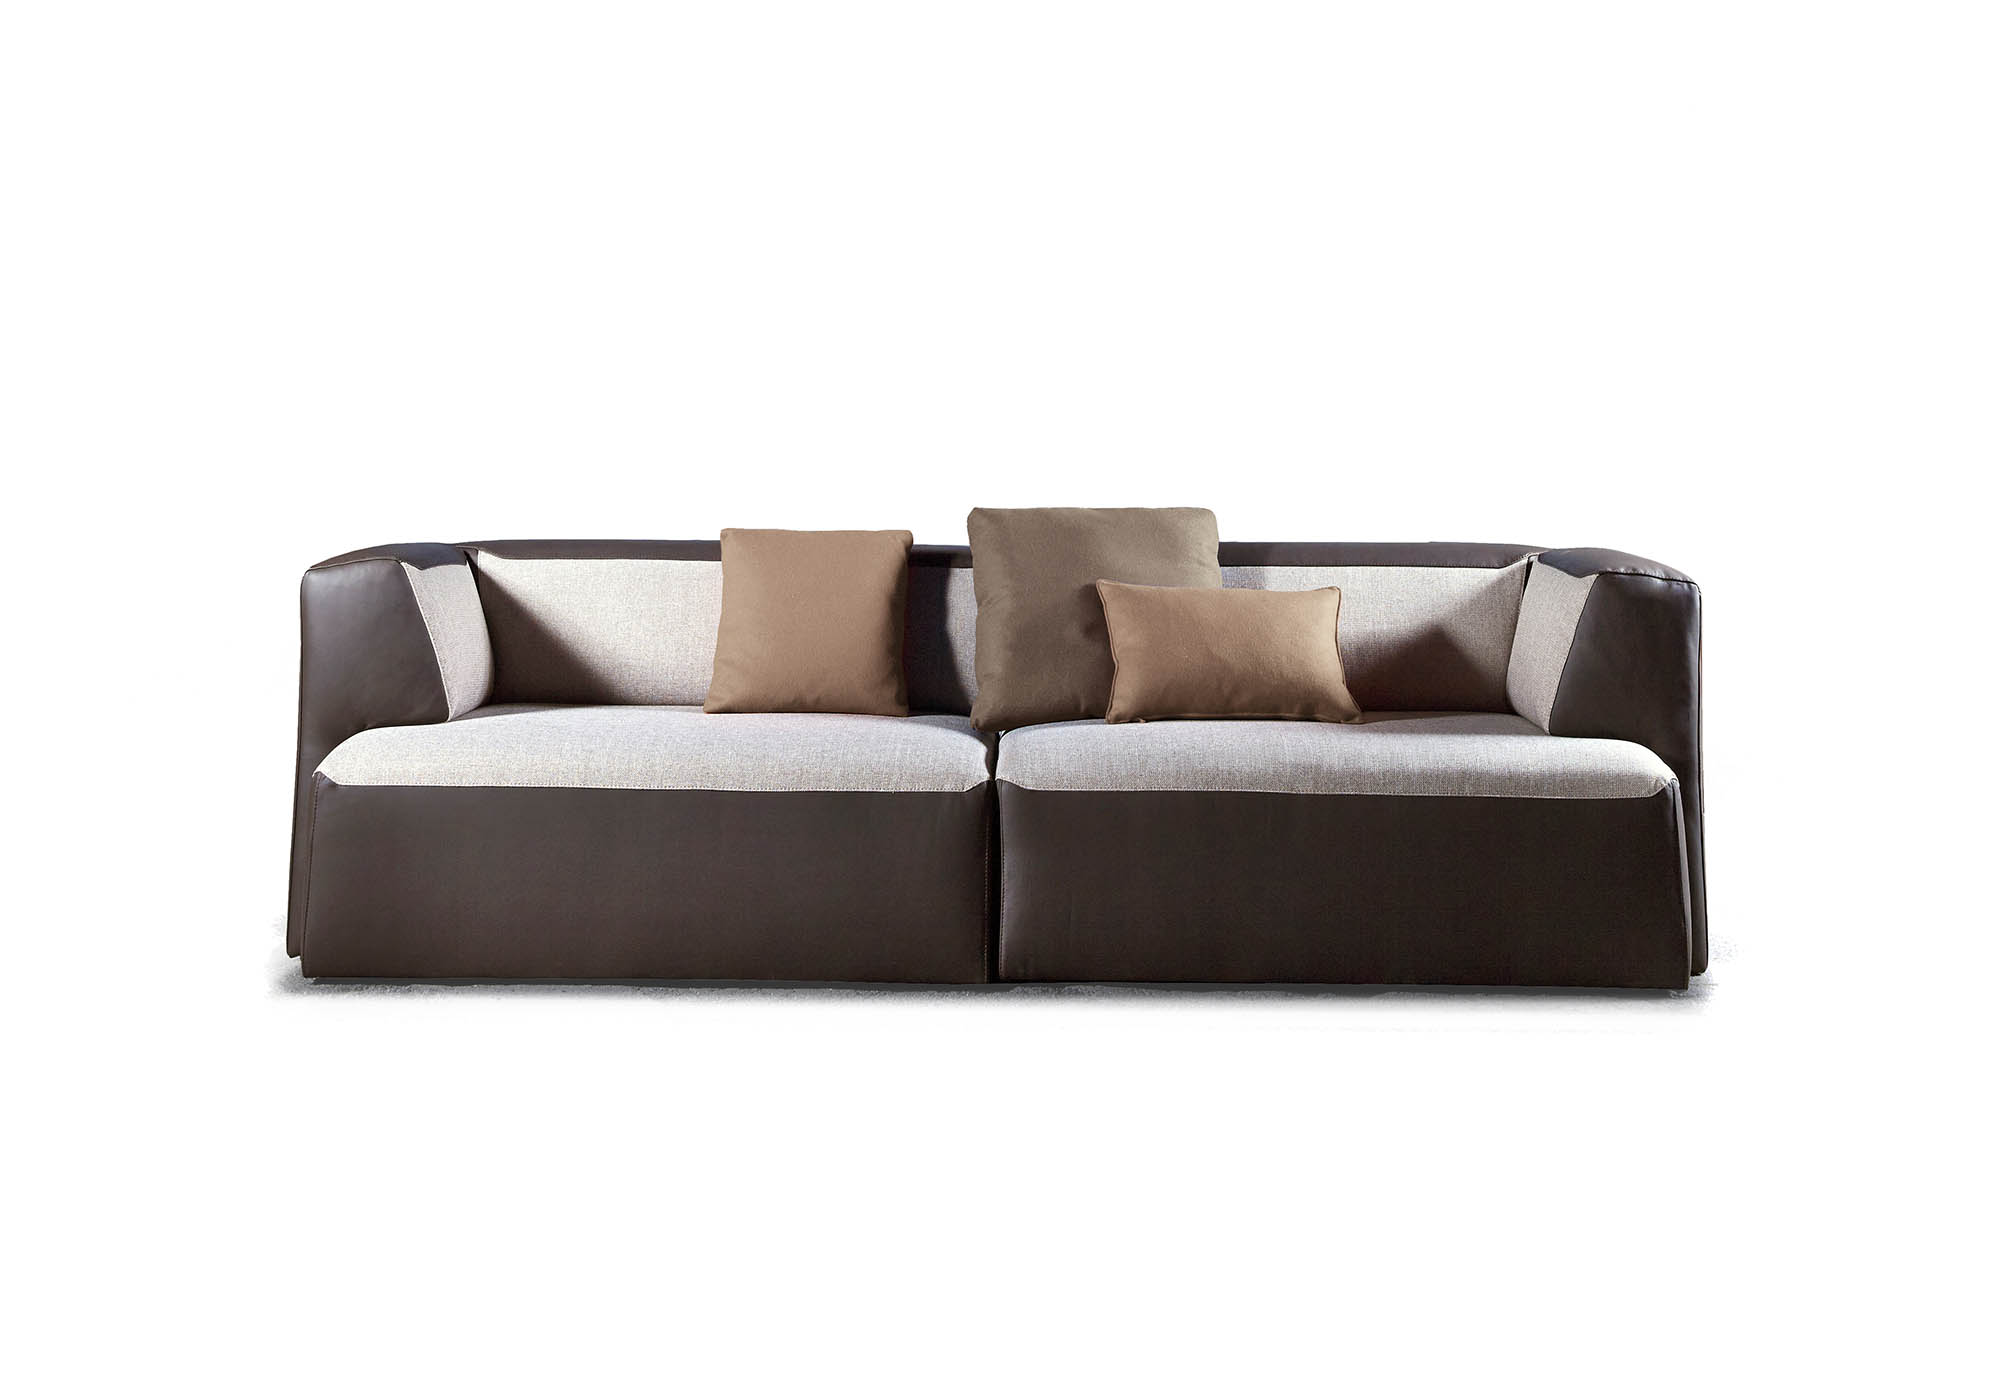 grassoler-producto-sofa-contract-cayman-galeria-19